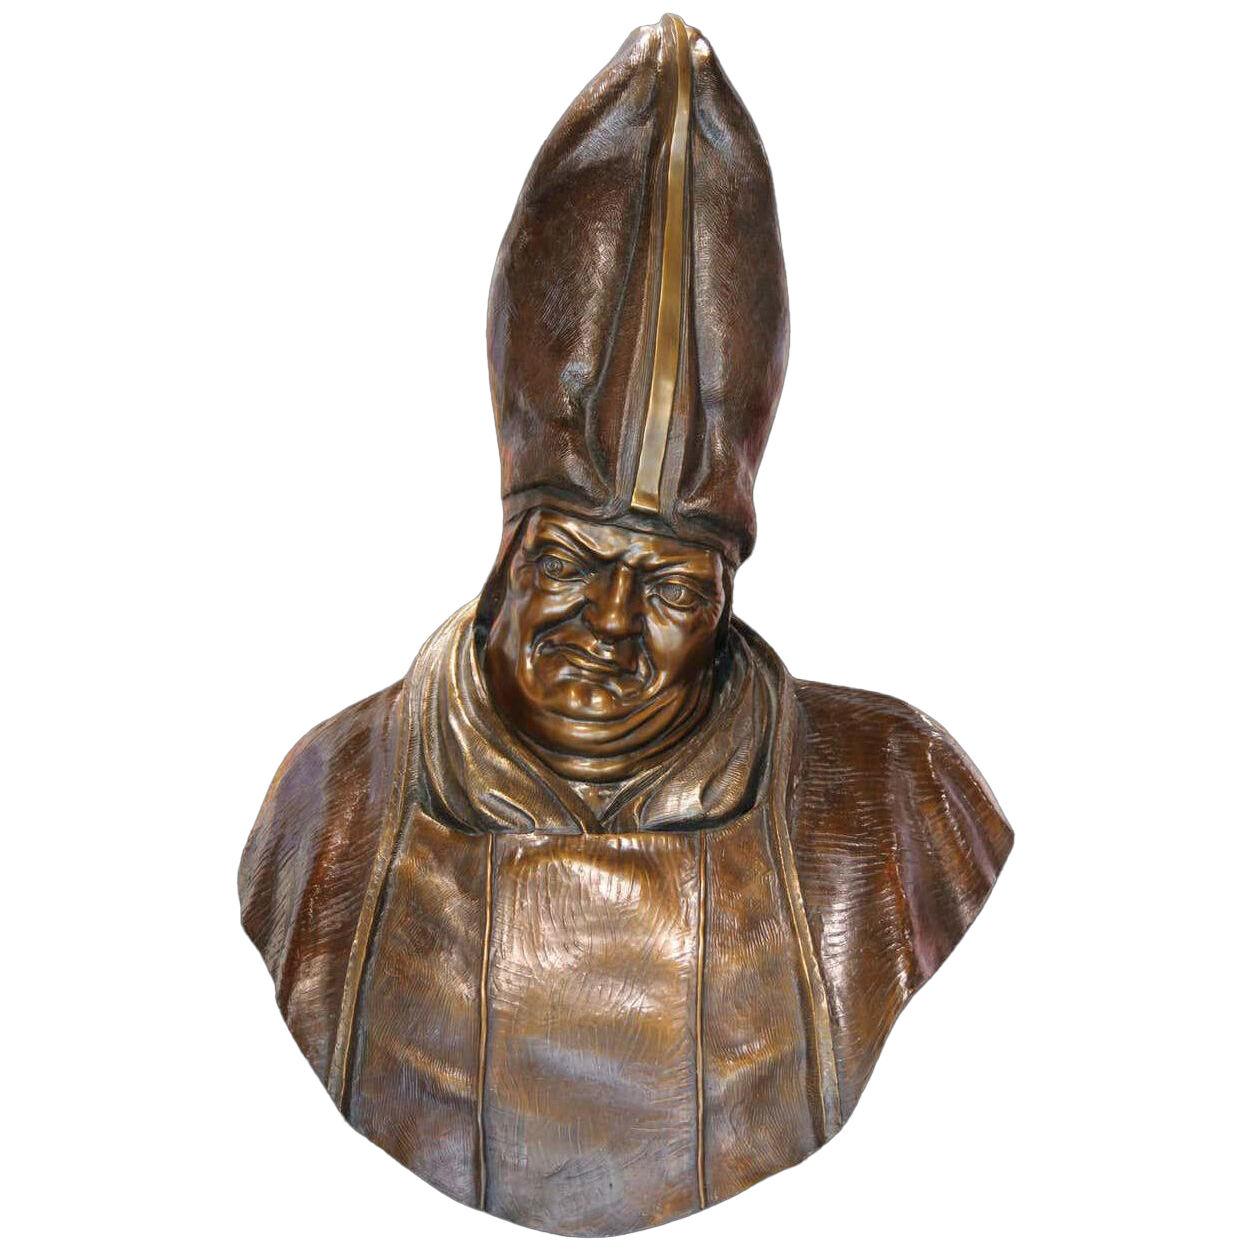 1990 Jerry Boyle “The Cardinal” Catholic Priest Bust Bronze Sculpture